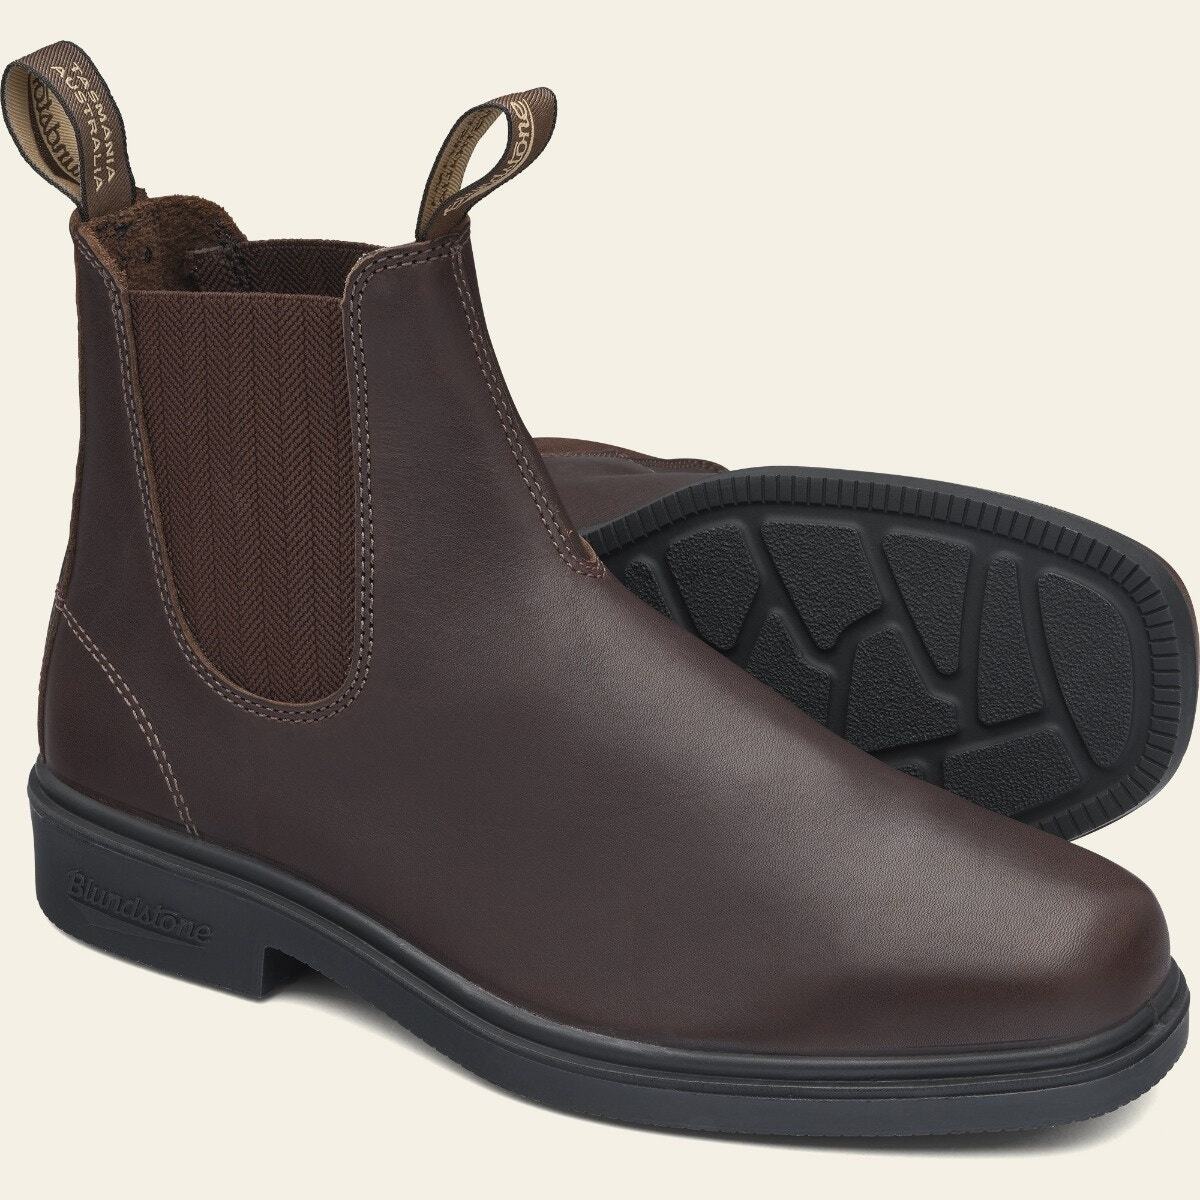 Blundstone Premium Leather Elastic Sided Dress Boot - 659